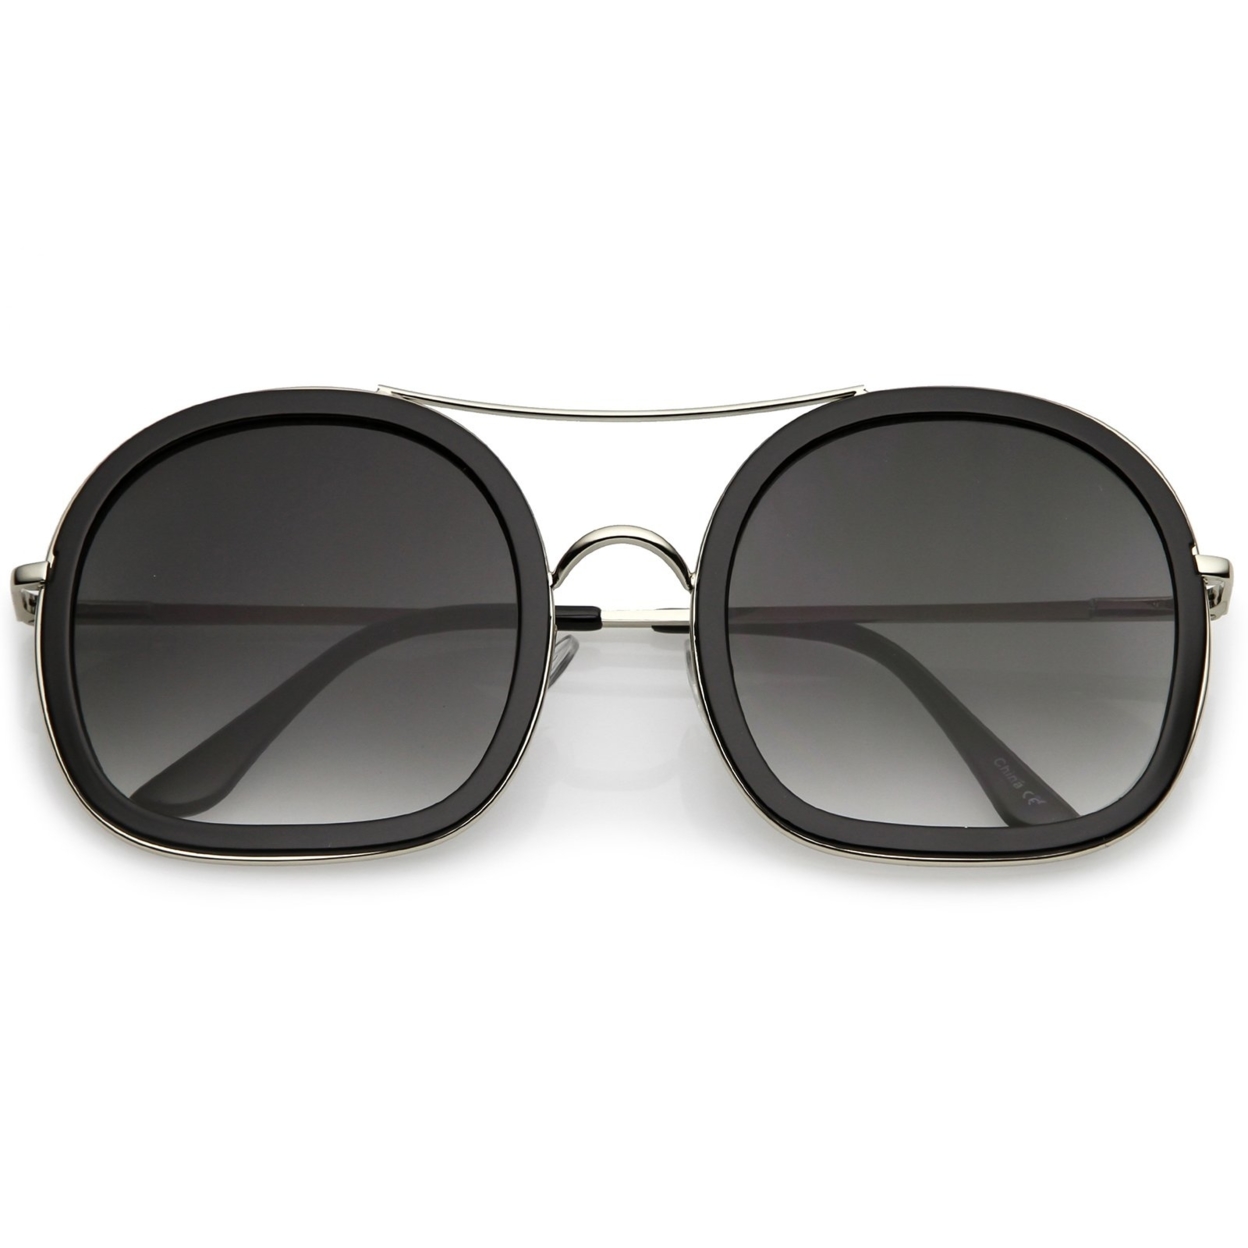 Oversize Round Sunglasses Double Metal Crossbar Thin Arms Flat Lens 58mm - Black Black / Smoke